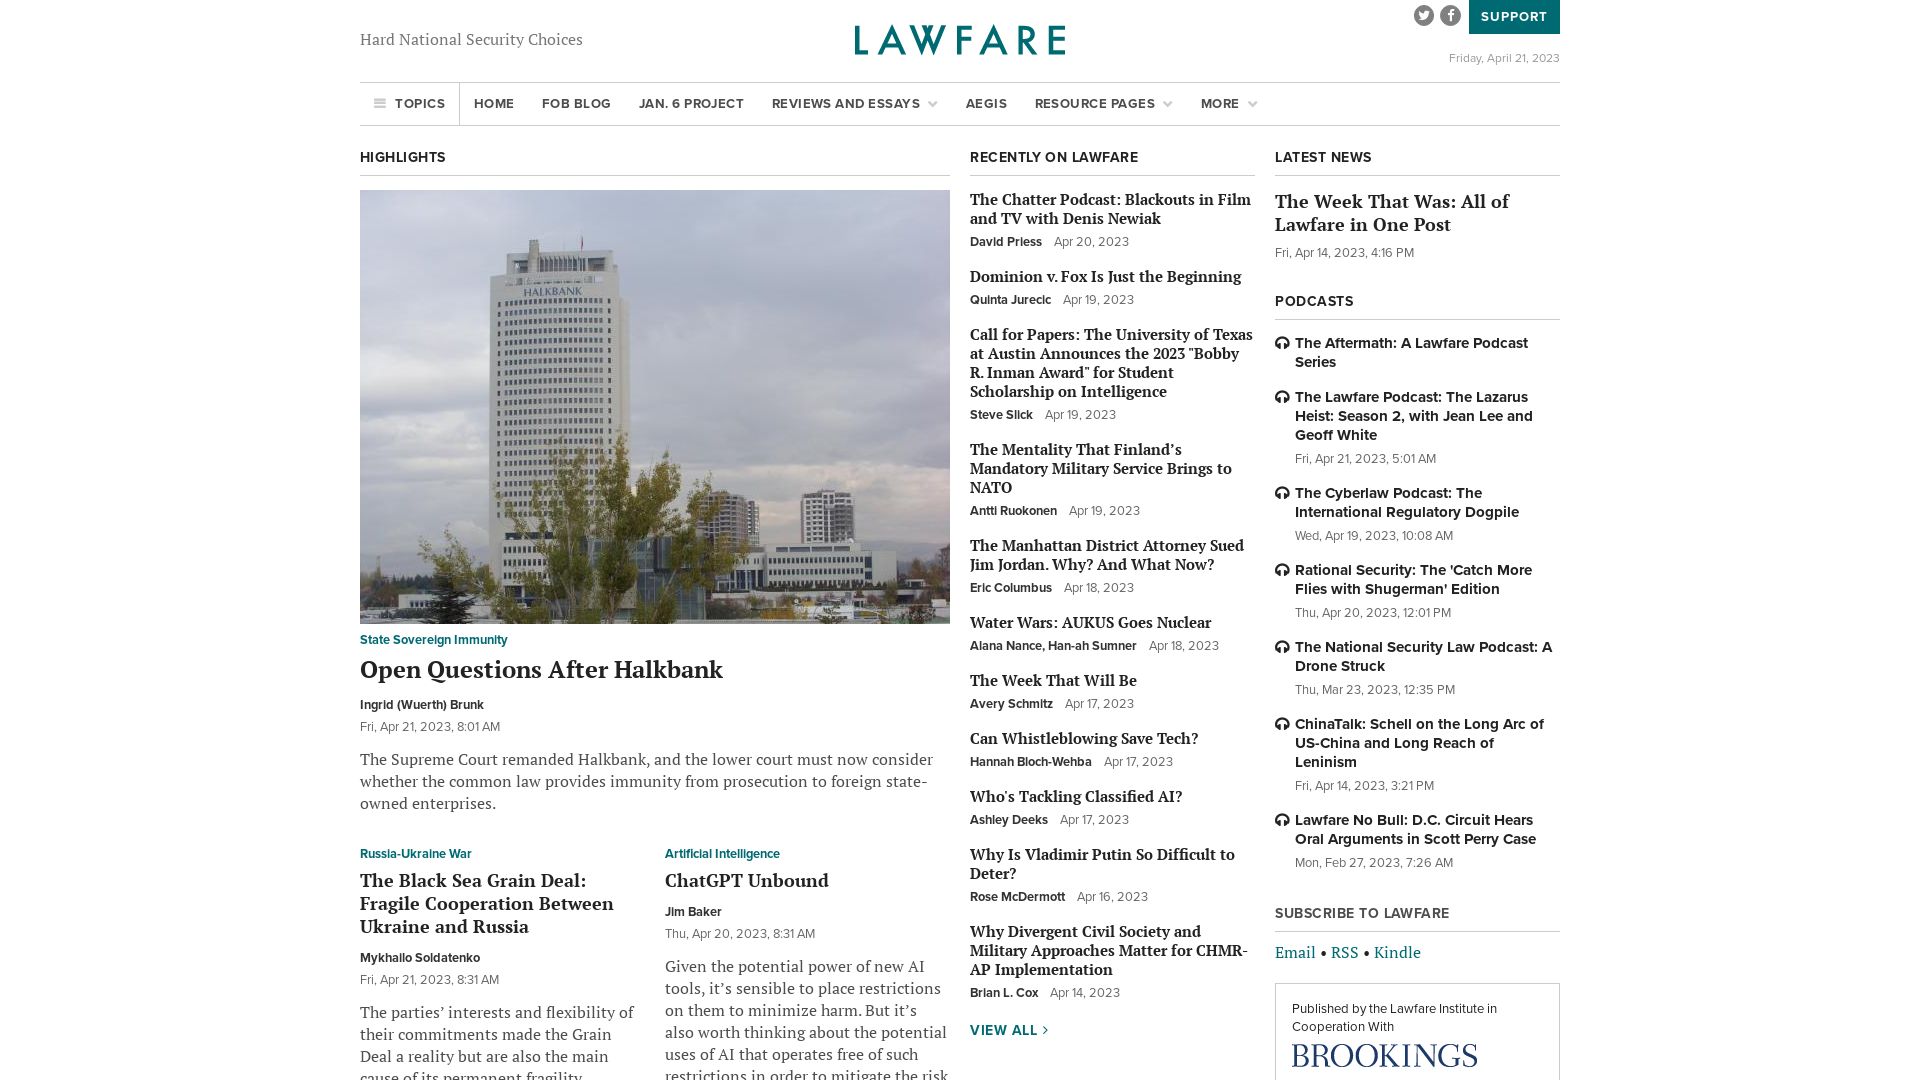 Website status lawfareblog.com is   ONLINE